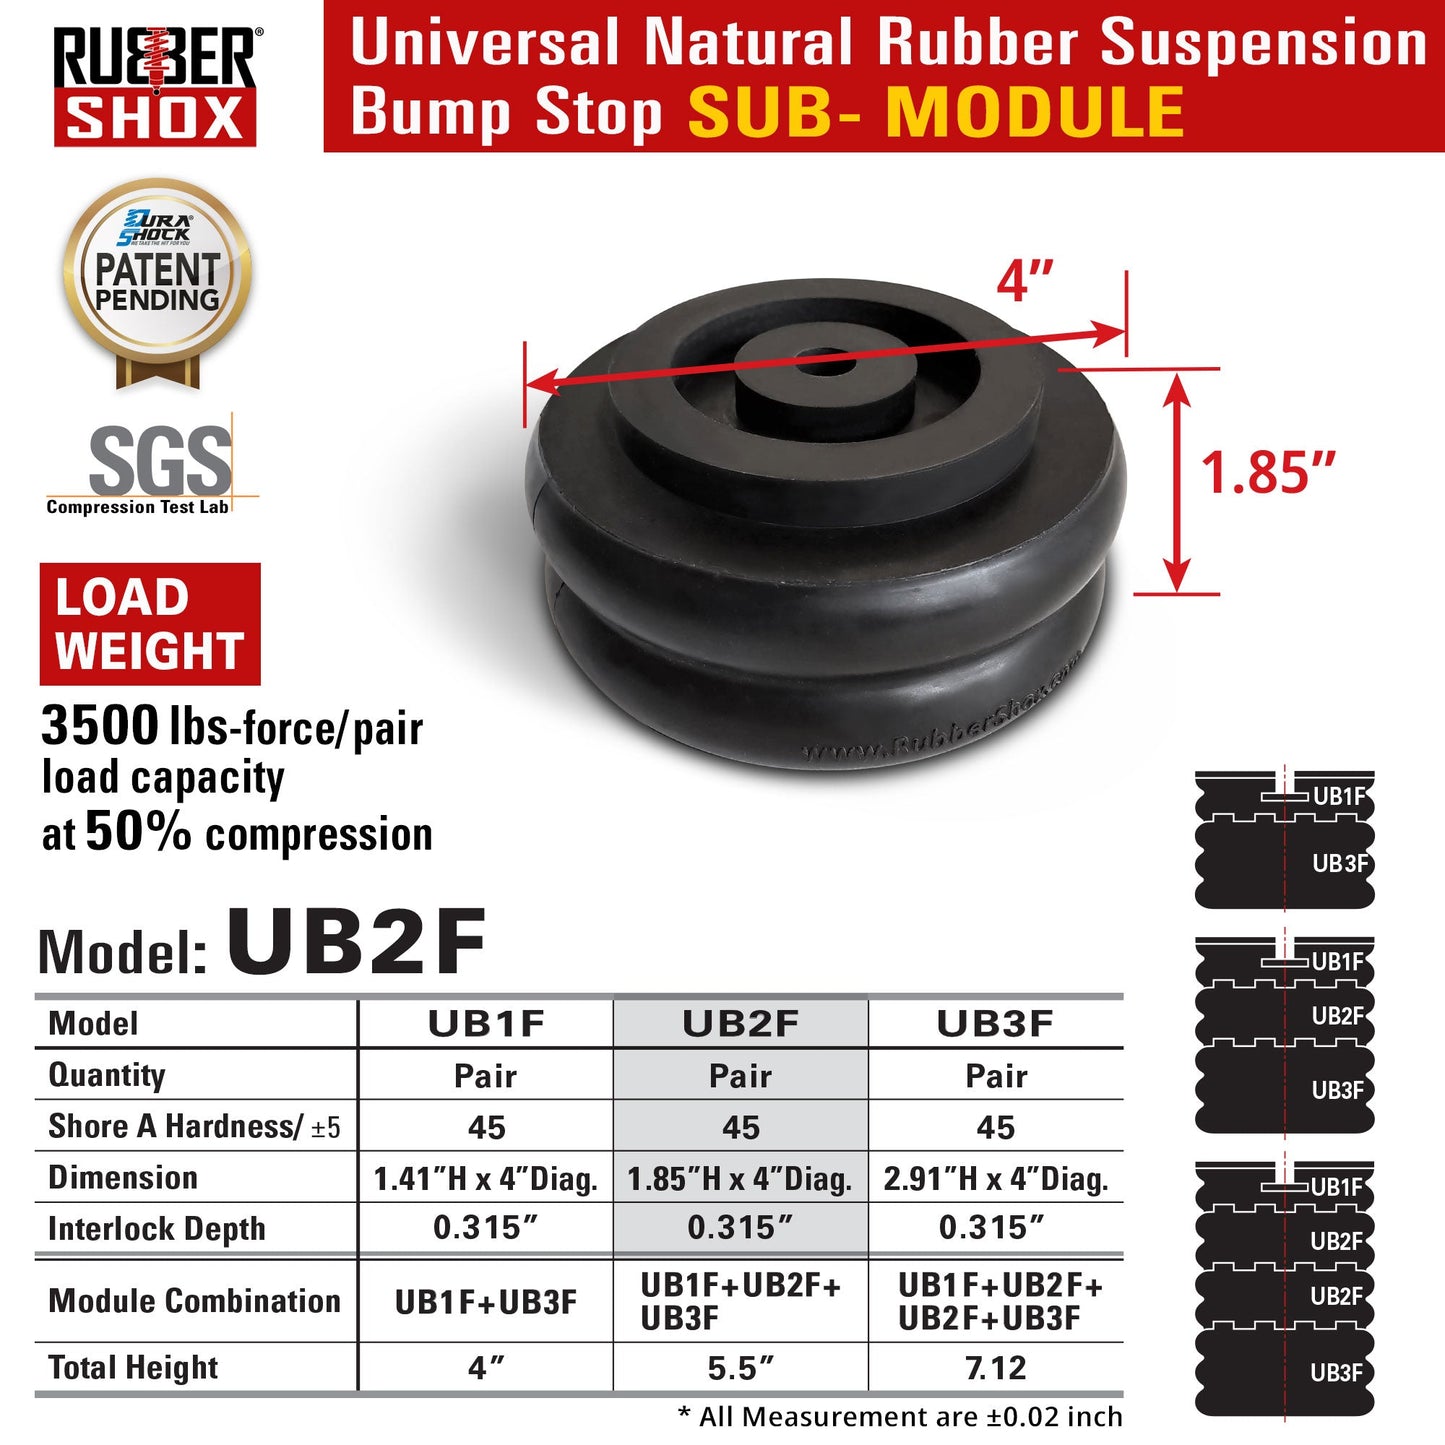 Modular Universal Natural Rubber Suspension Bump Stop - SUB Module (Set of 2)